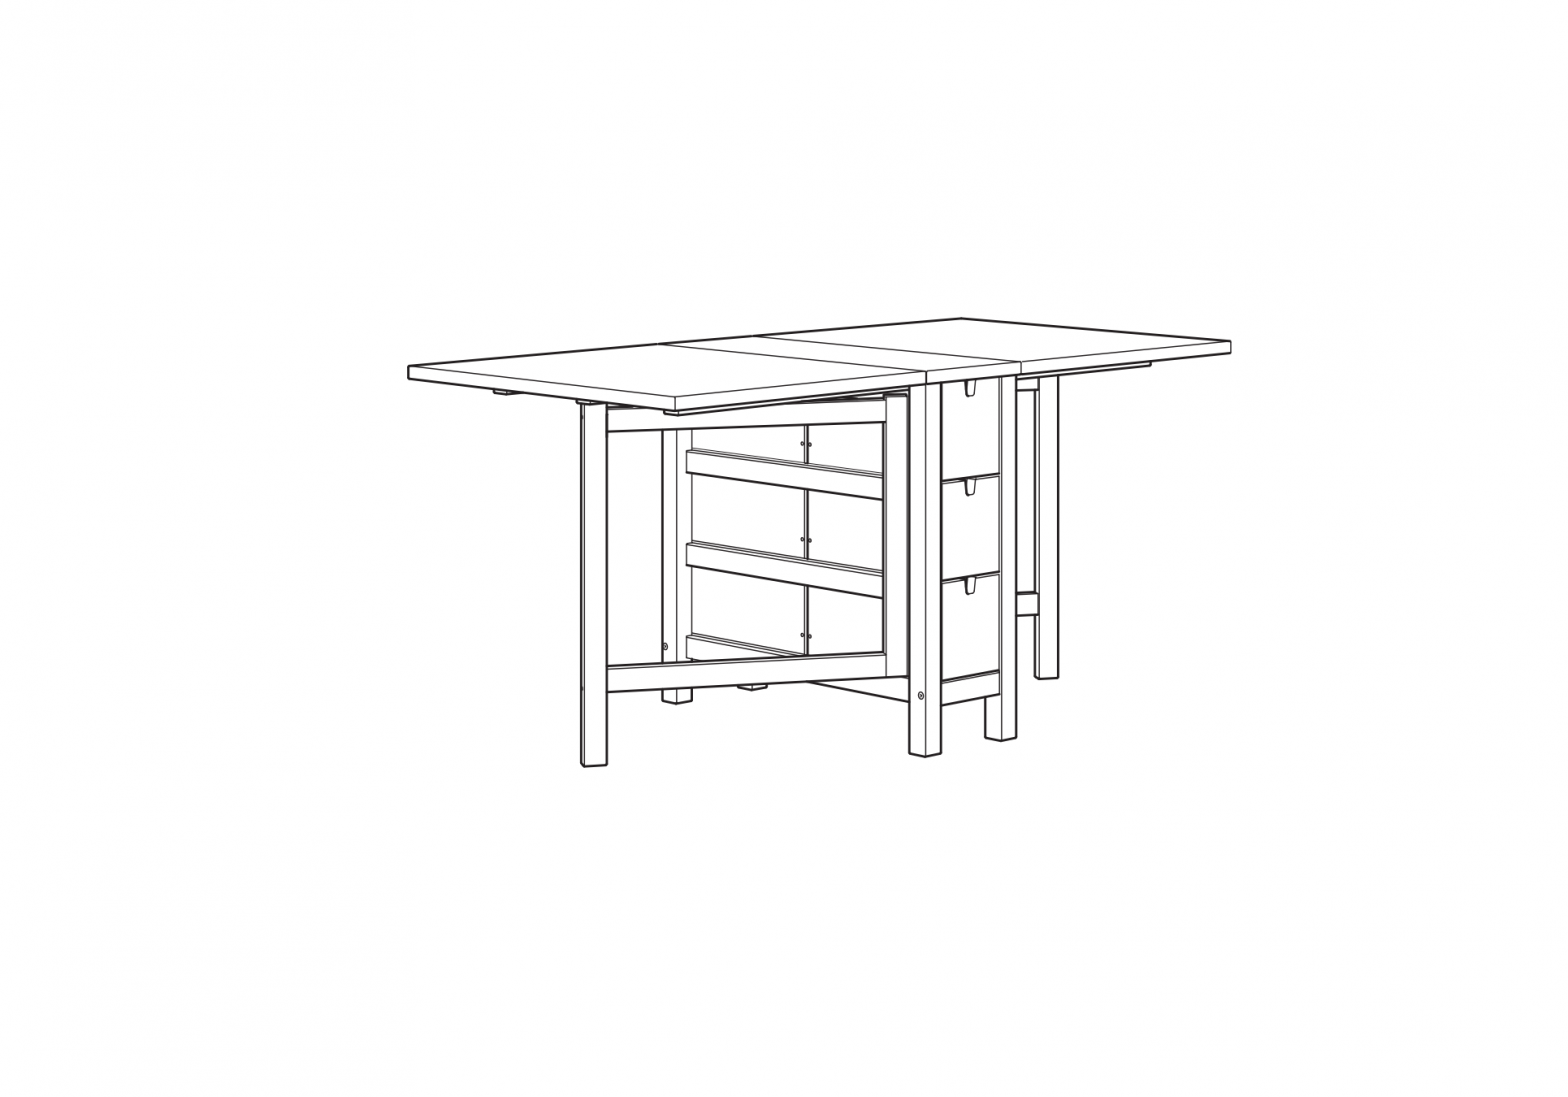 IKEA NORDEN Gateleg Table Installation Guide